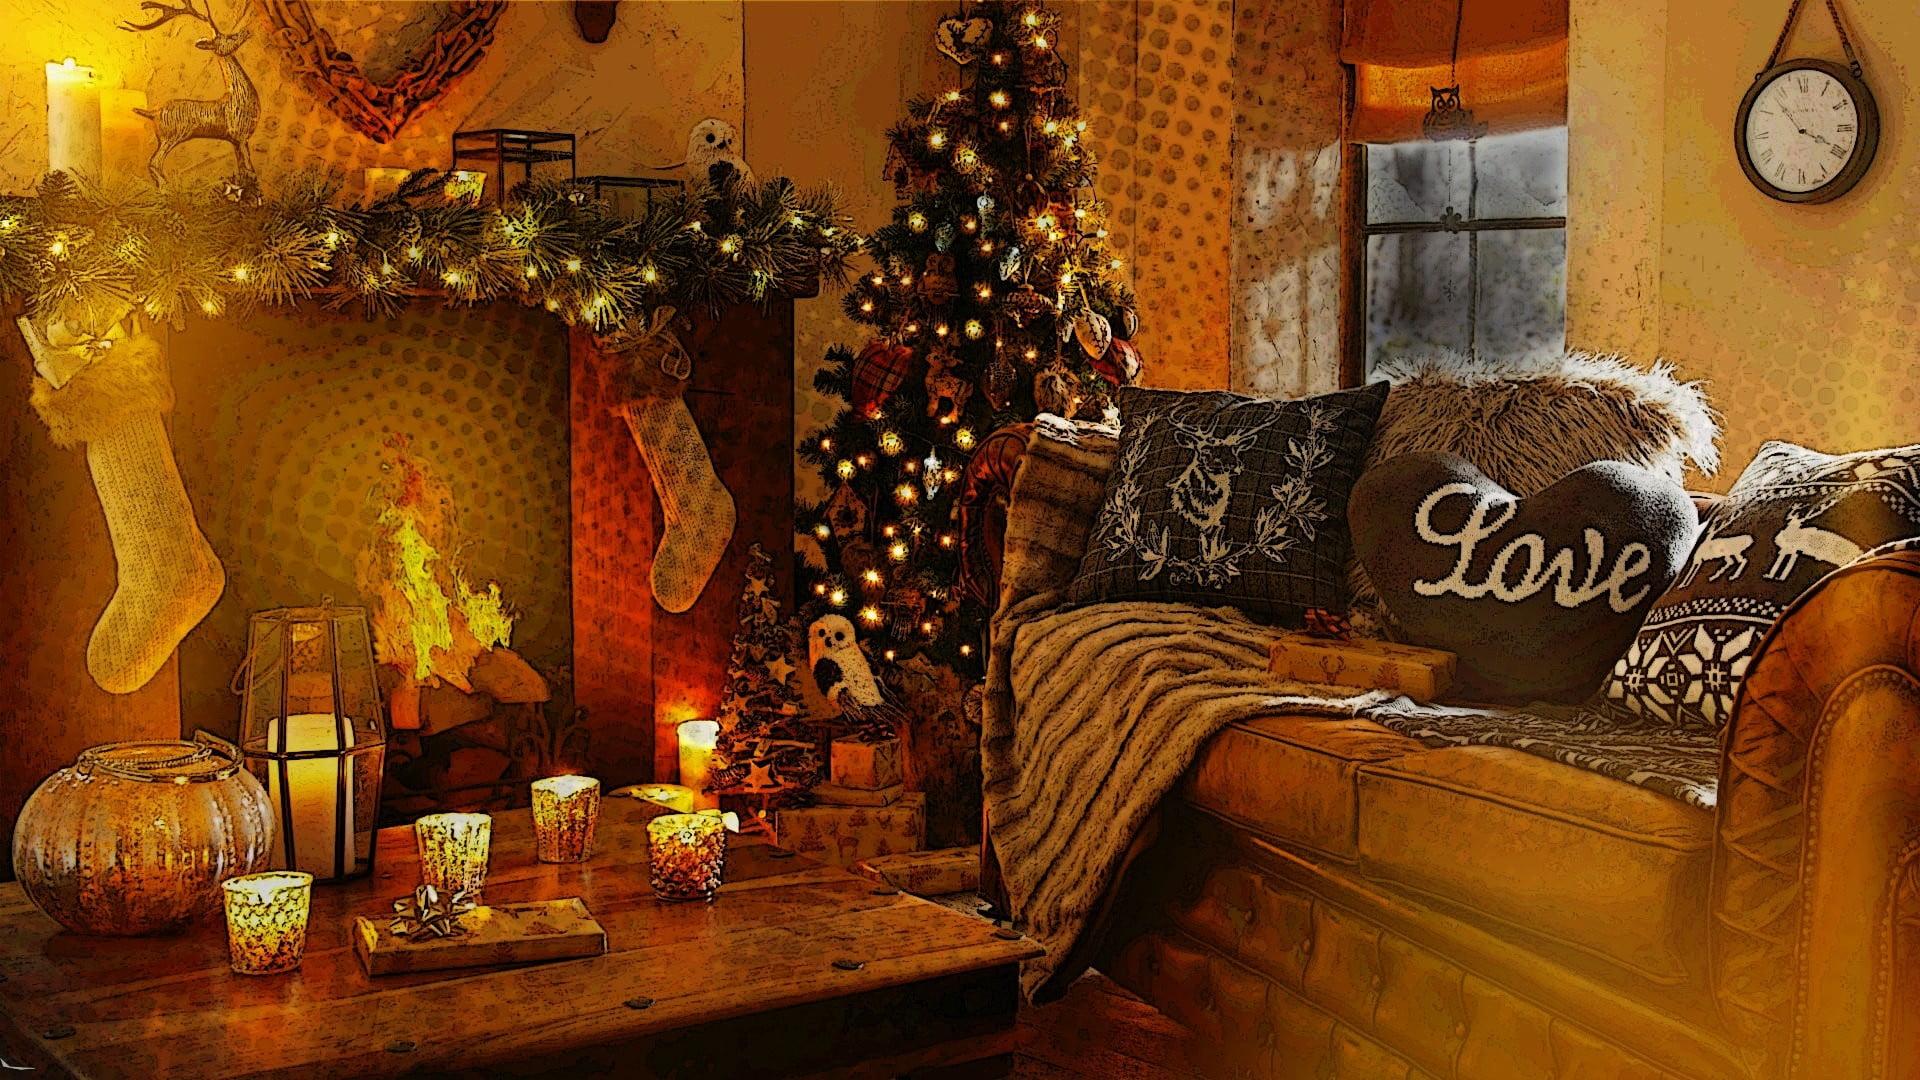 Christmas tree, sofa, fireplace and coffee table, fireplace